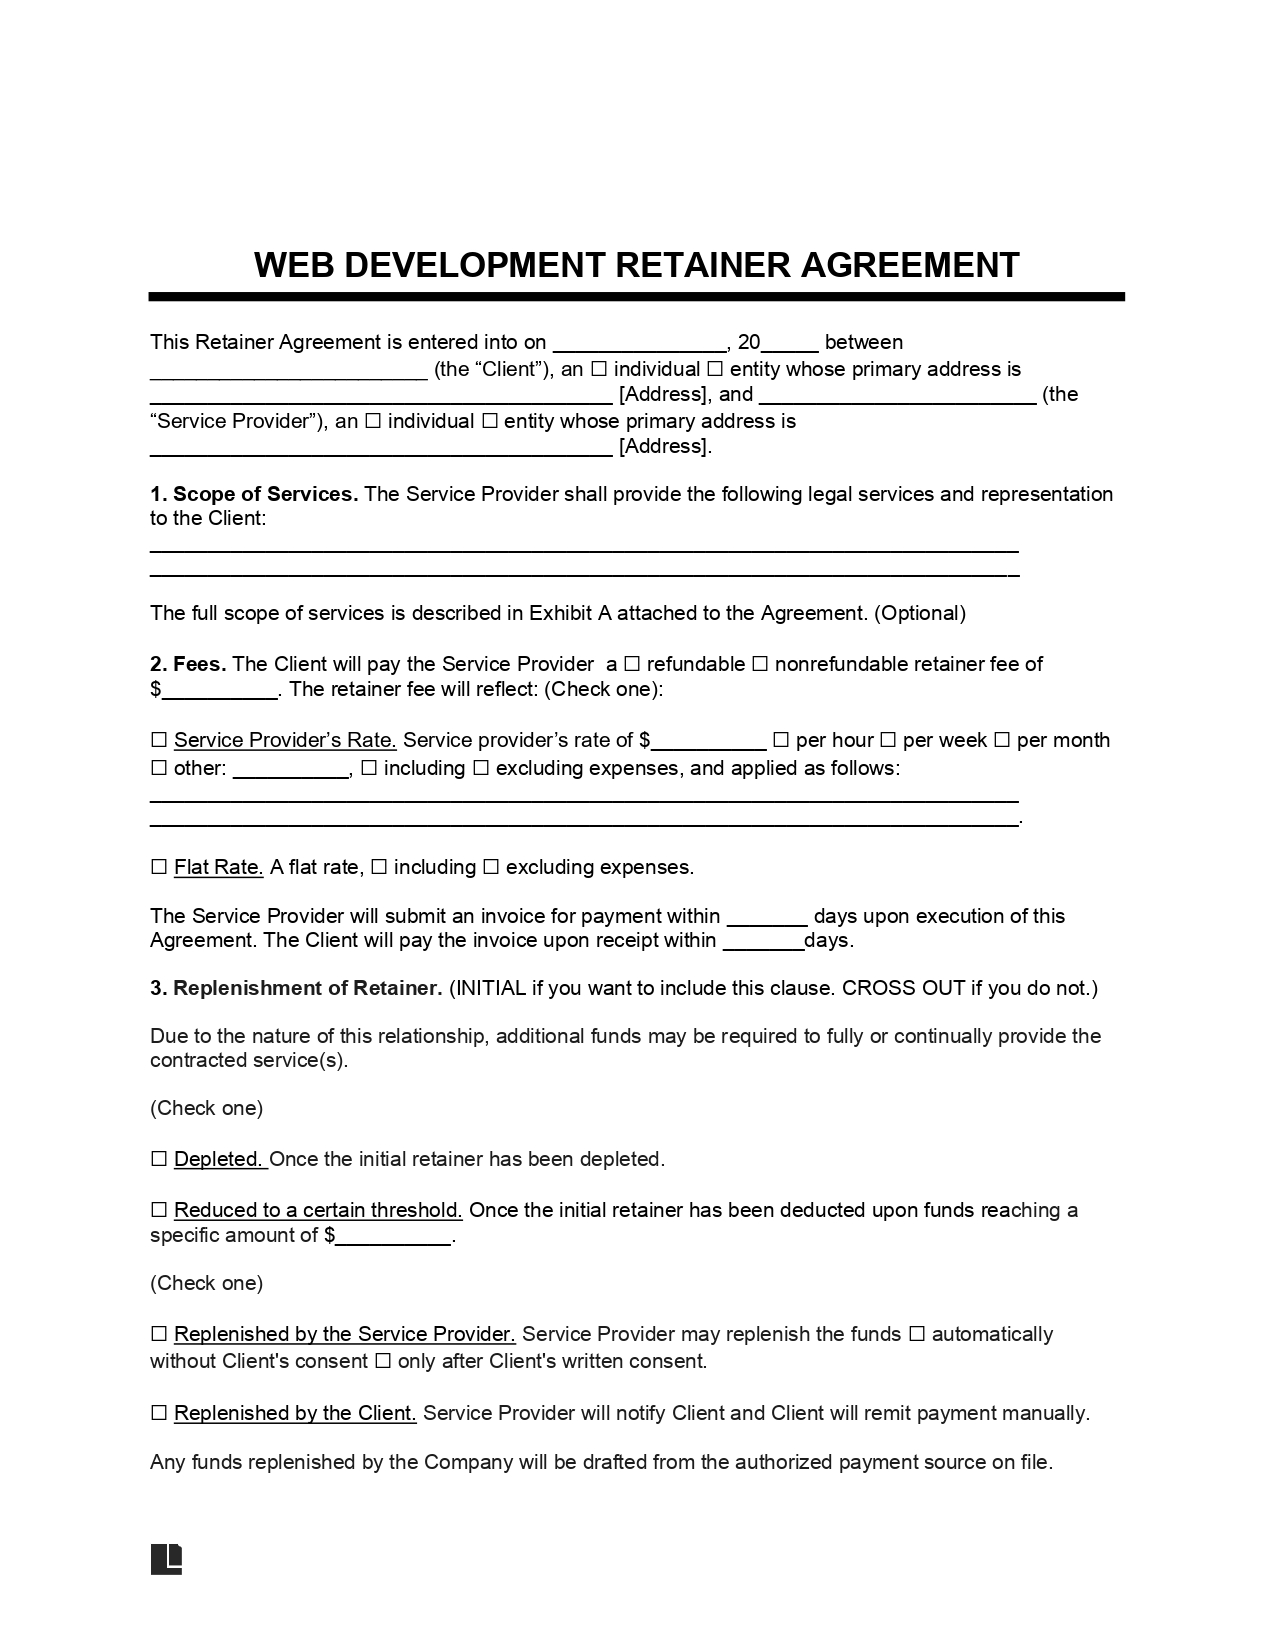 Web Development Retainer Agreement